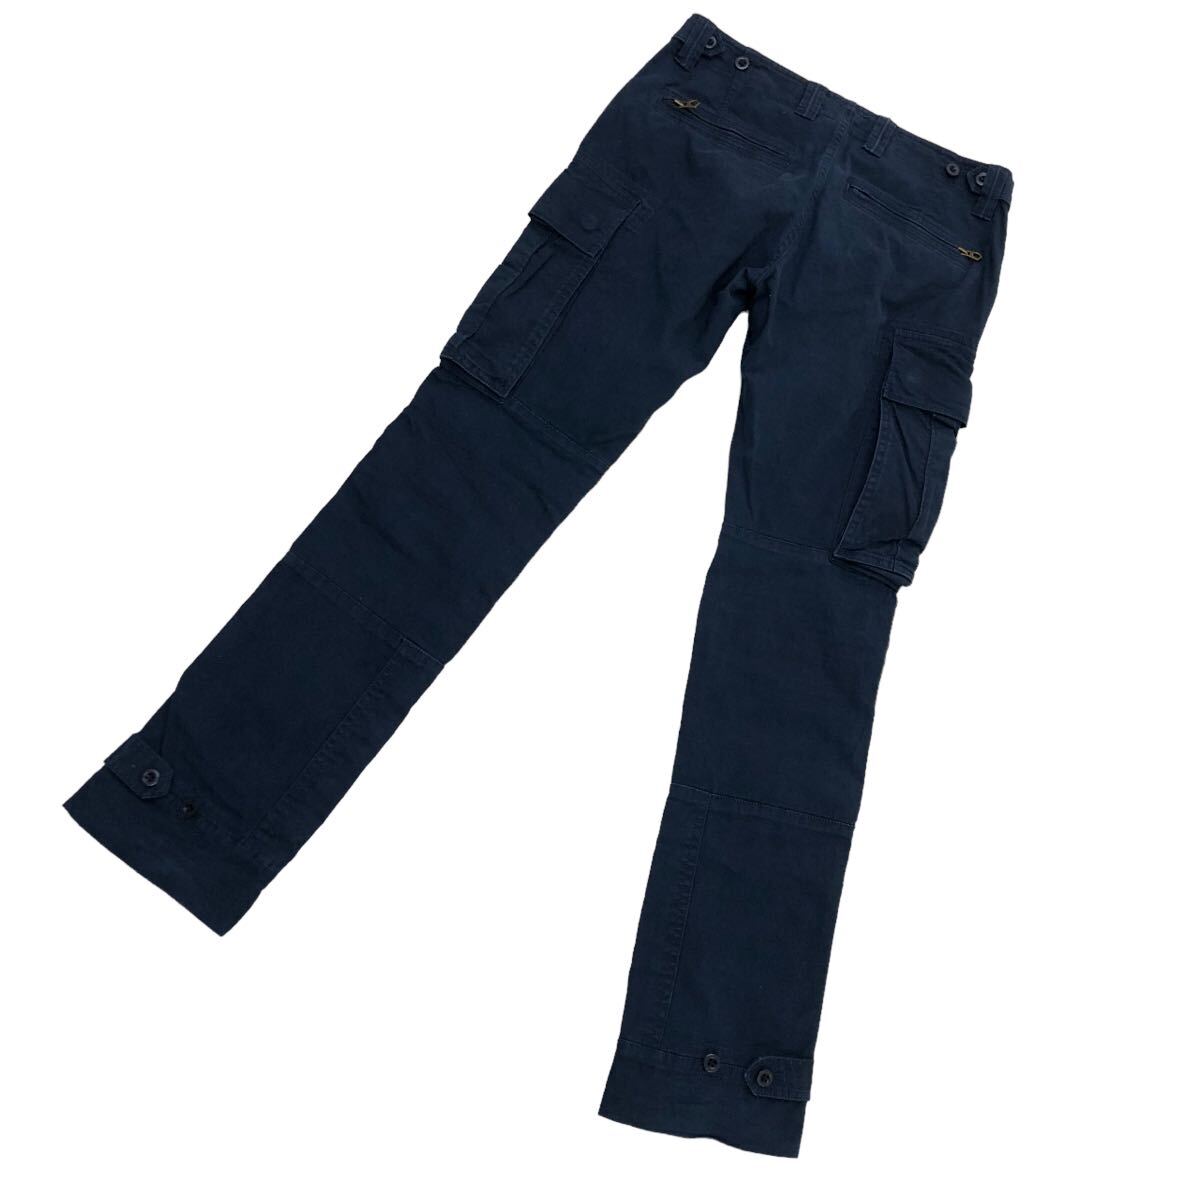 NS118 RALPH LAUREN Ralph Lauren cargo pants pants bottoms slacks cotton cotton lady's 4 navy navy blue 